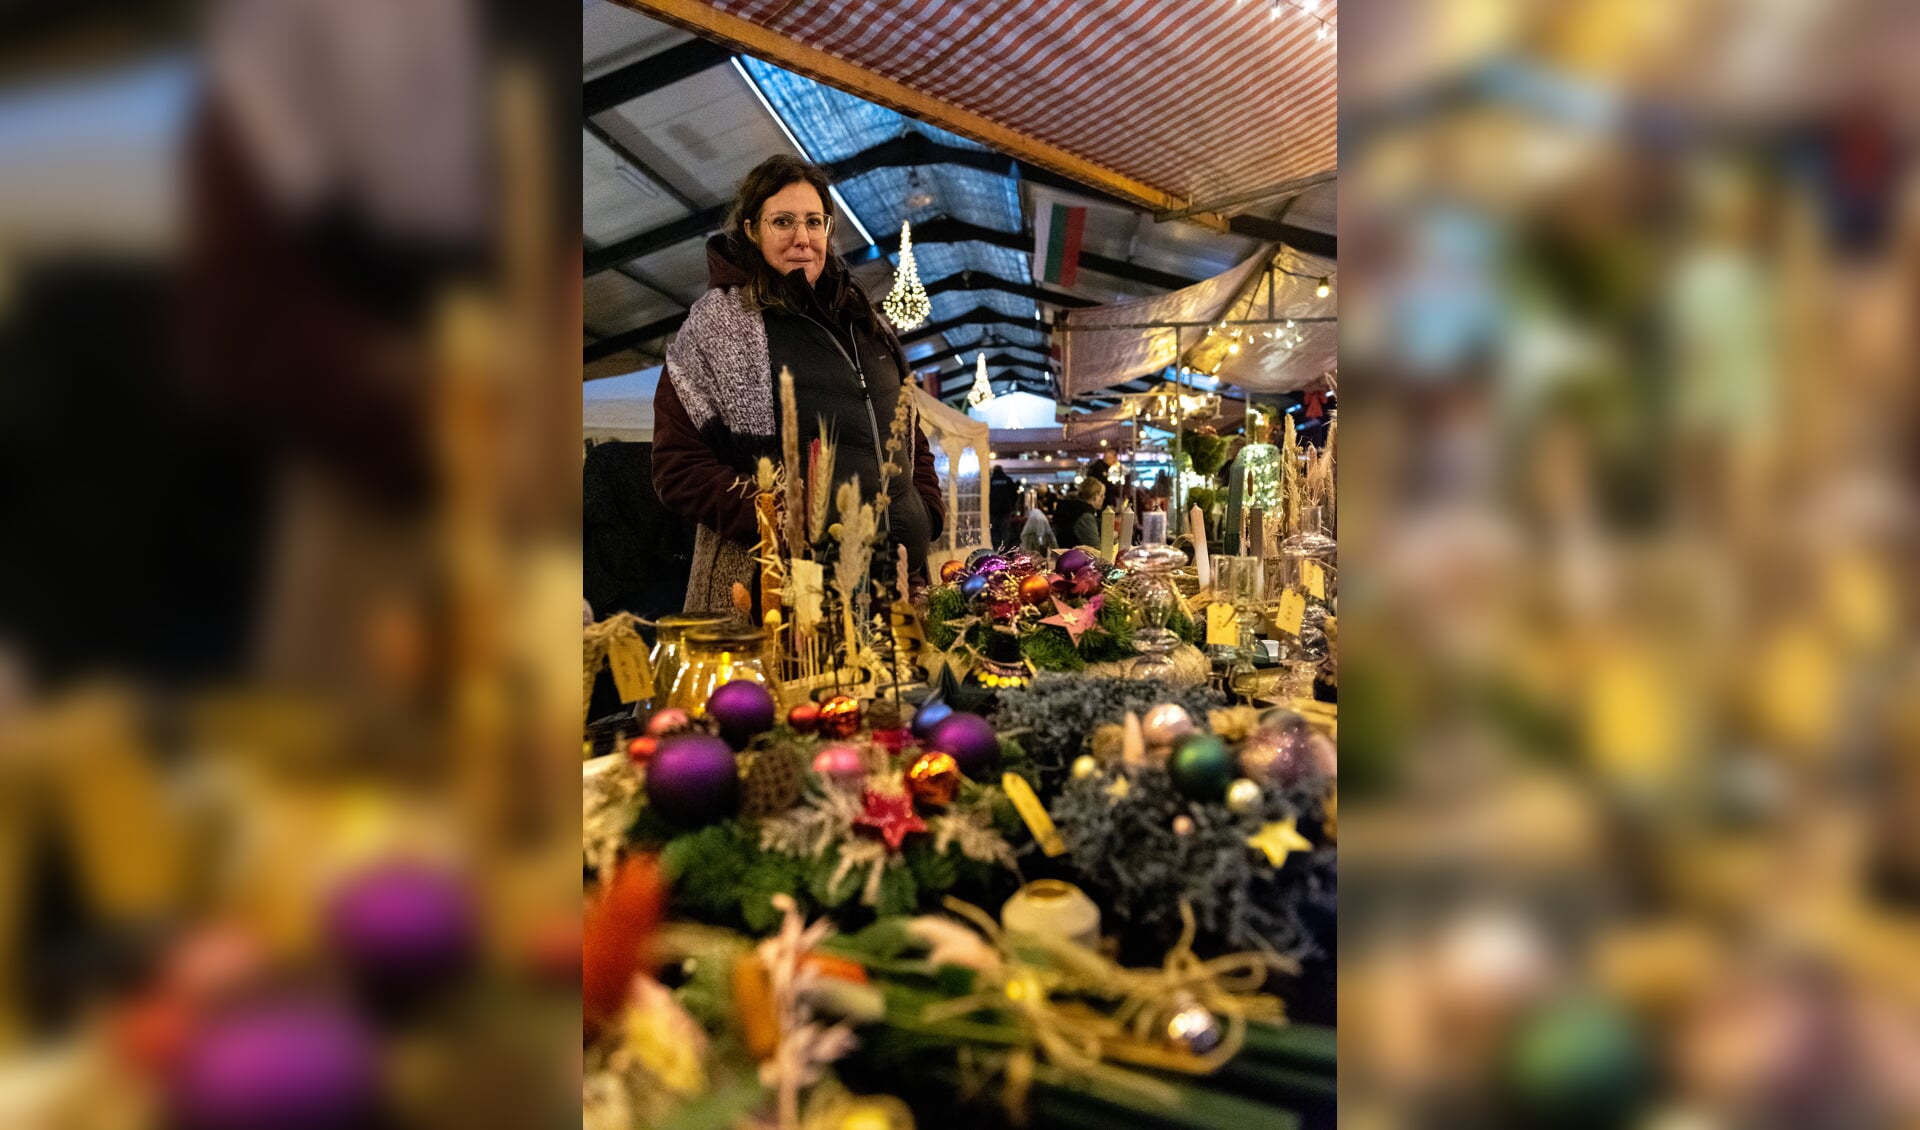 Kerstmarkt Tolbert in HJC Manege